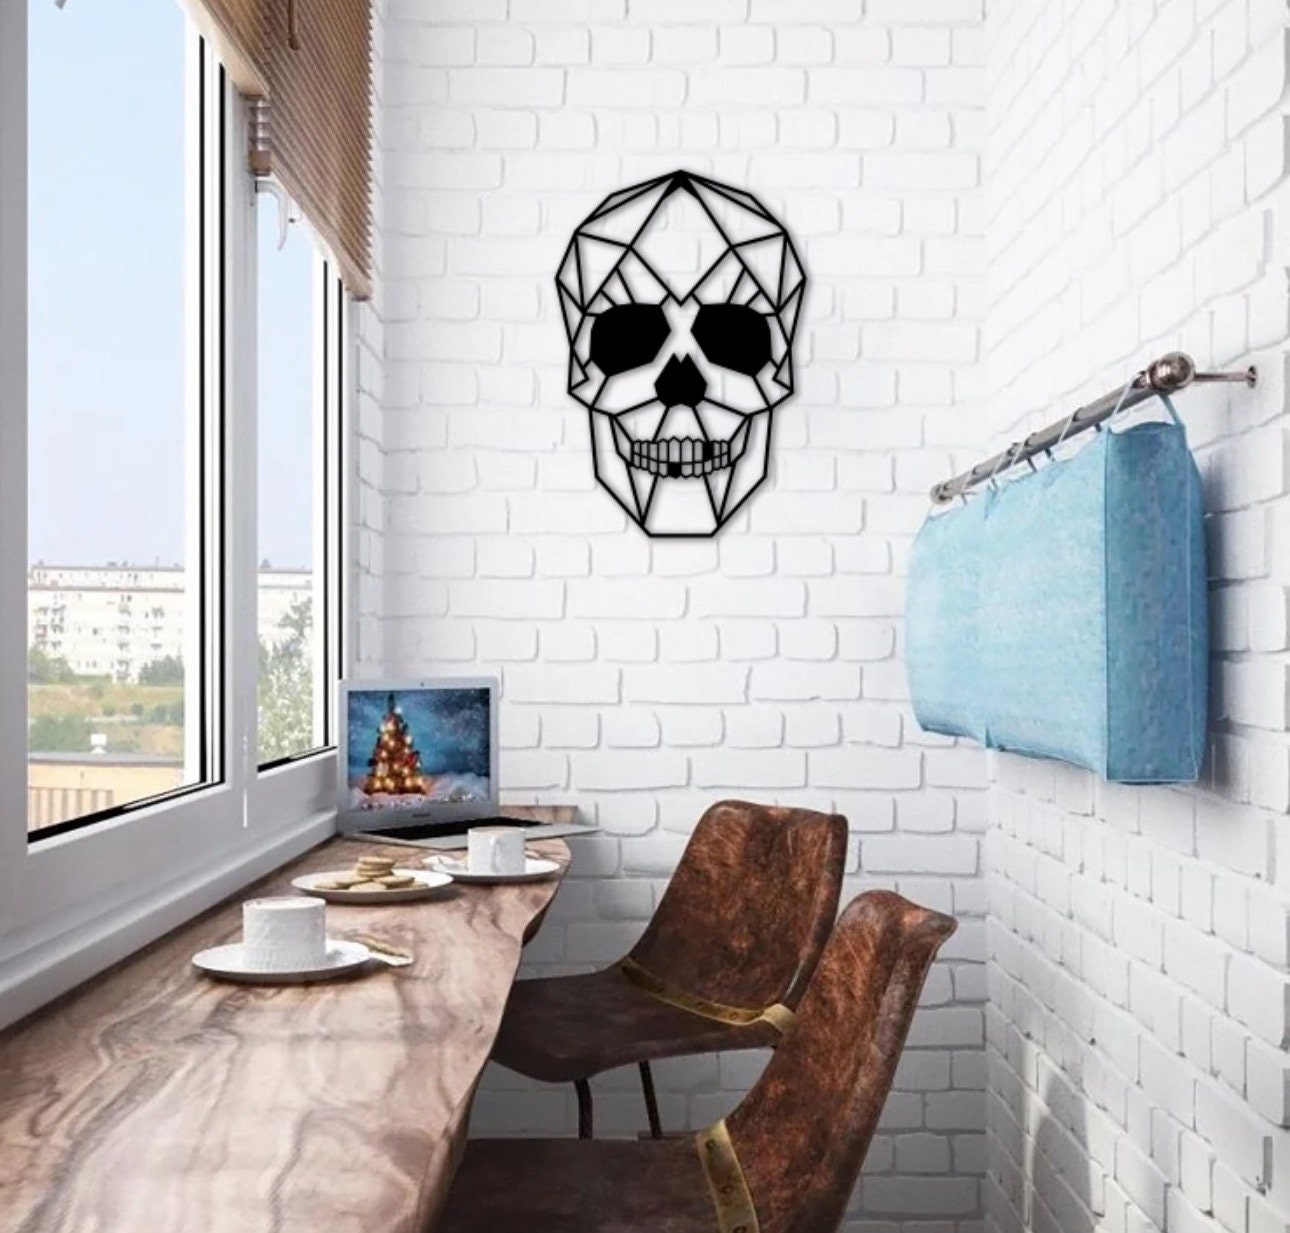  Led Totenkopf Skull Wand Deko Dekoration I Mit